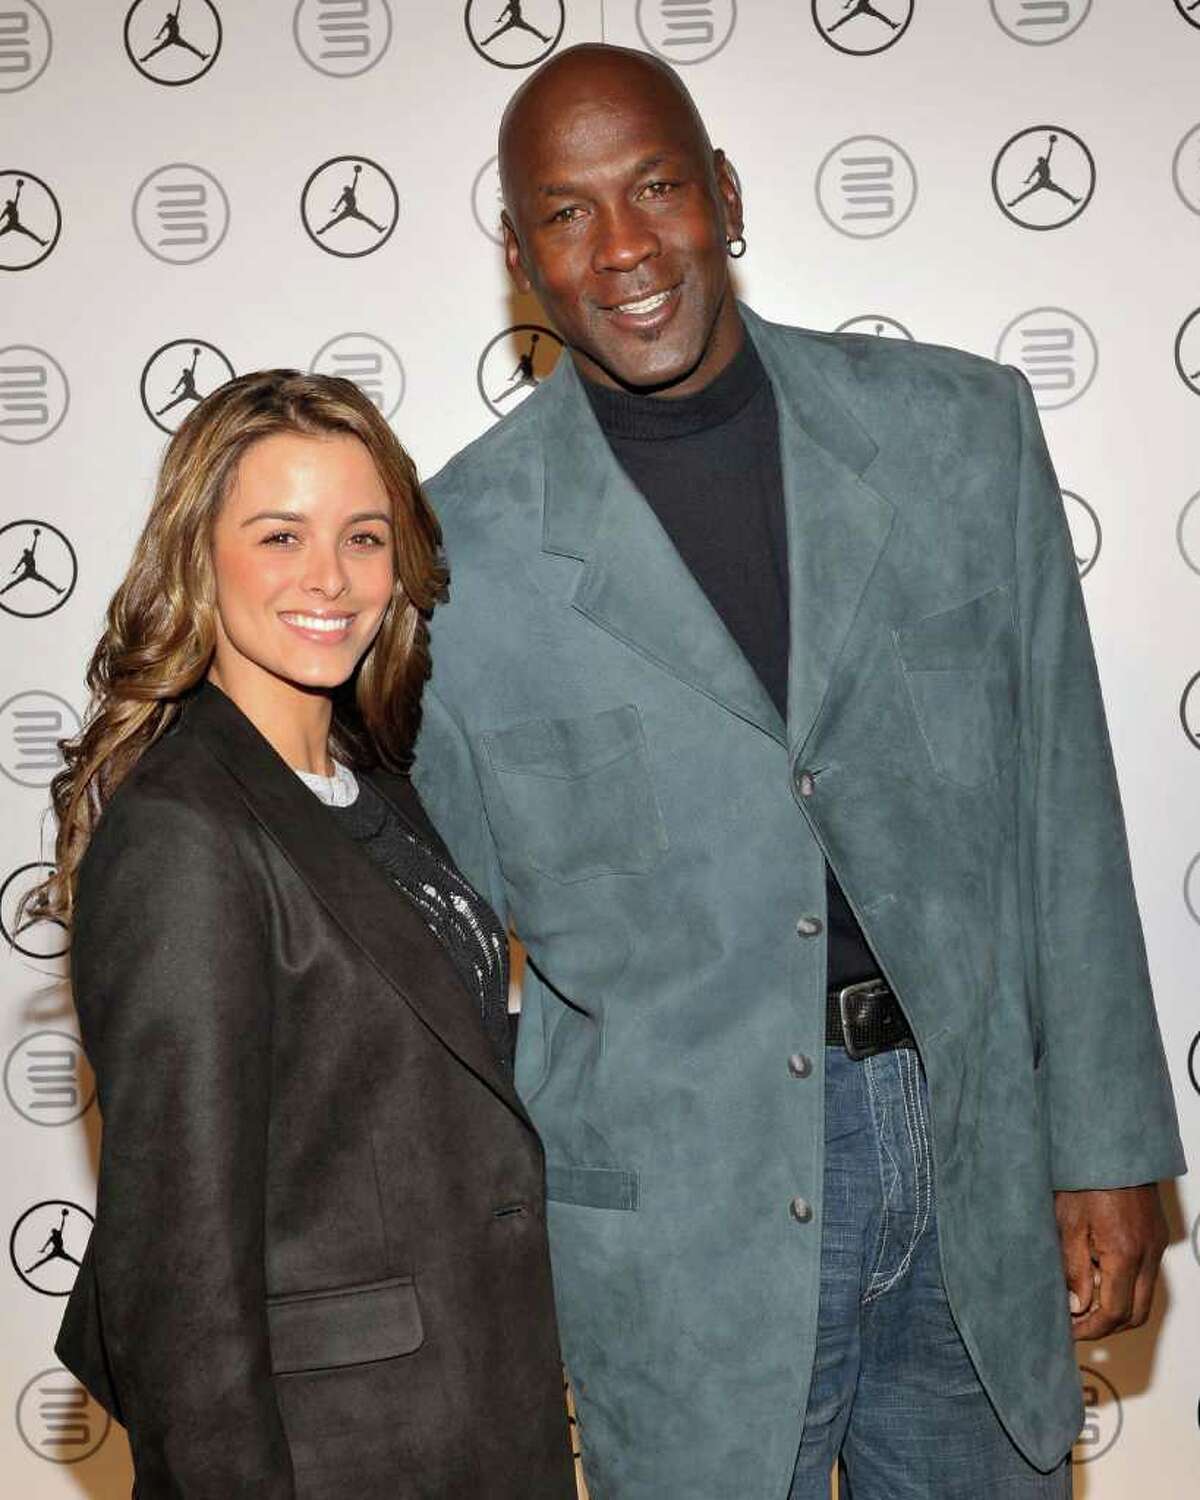 Michael Jordan Engaged To Model Yvette Prieto